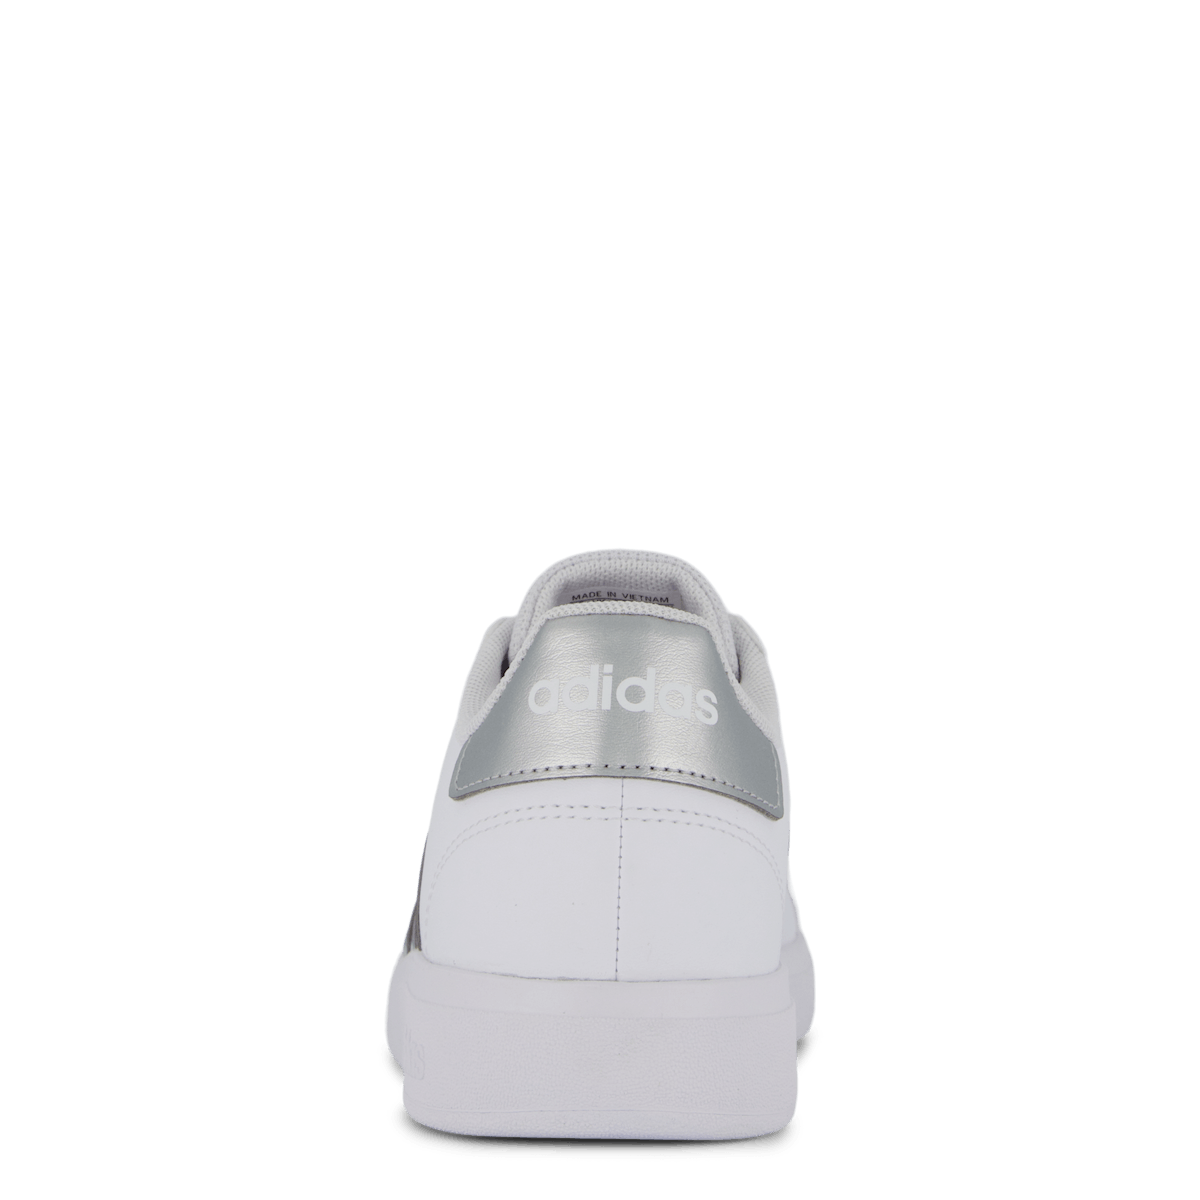 Grand Court Lifestyle Tennis Lace-Up Shoes Cloud White / Matte Silver / Matte Silver